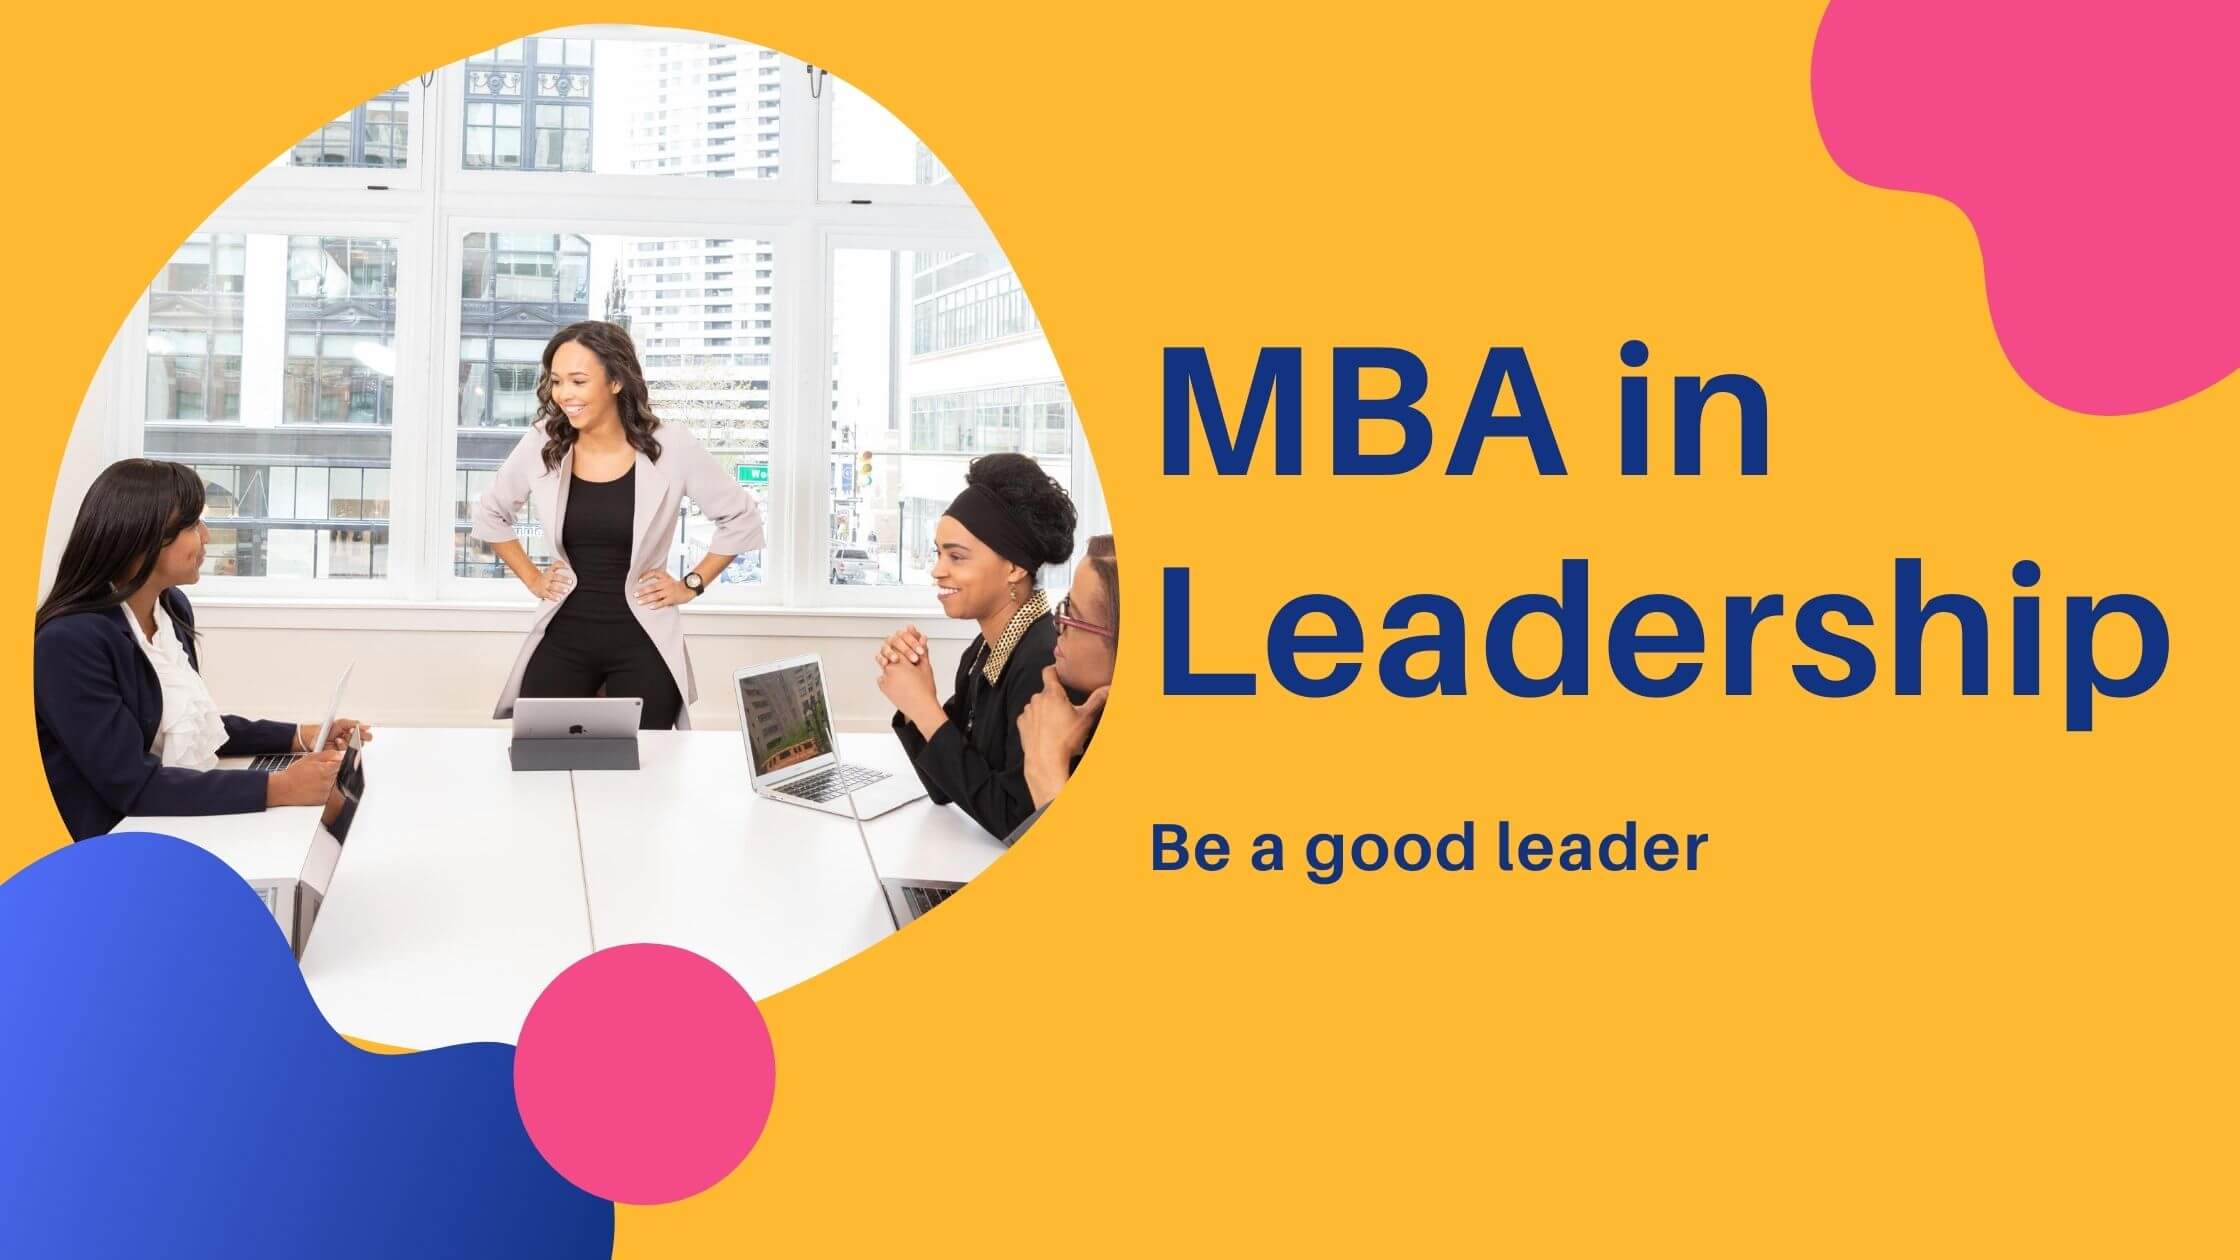 MBA IN LEADERSHIP